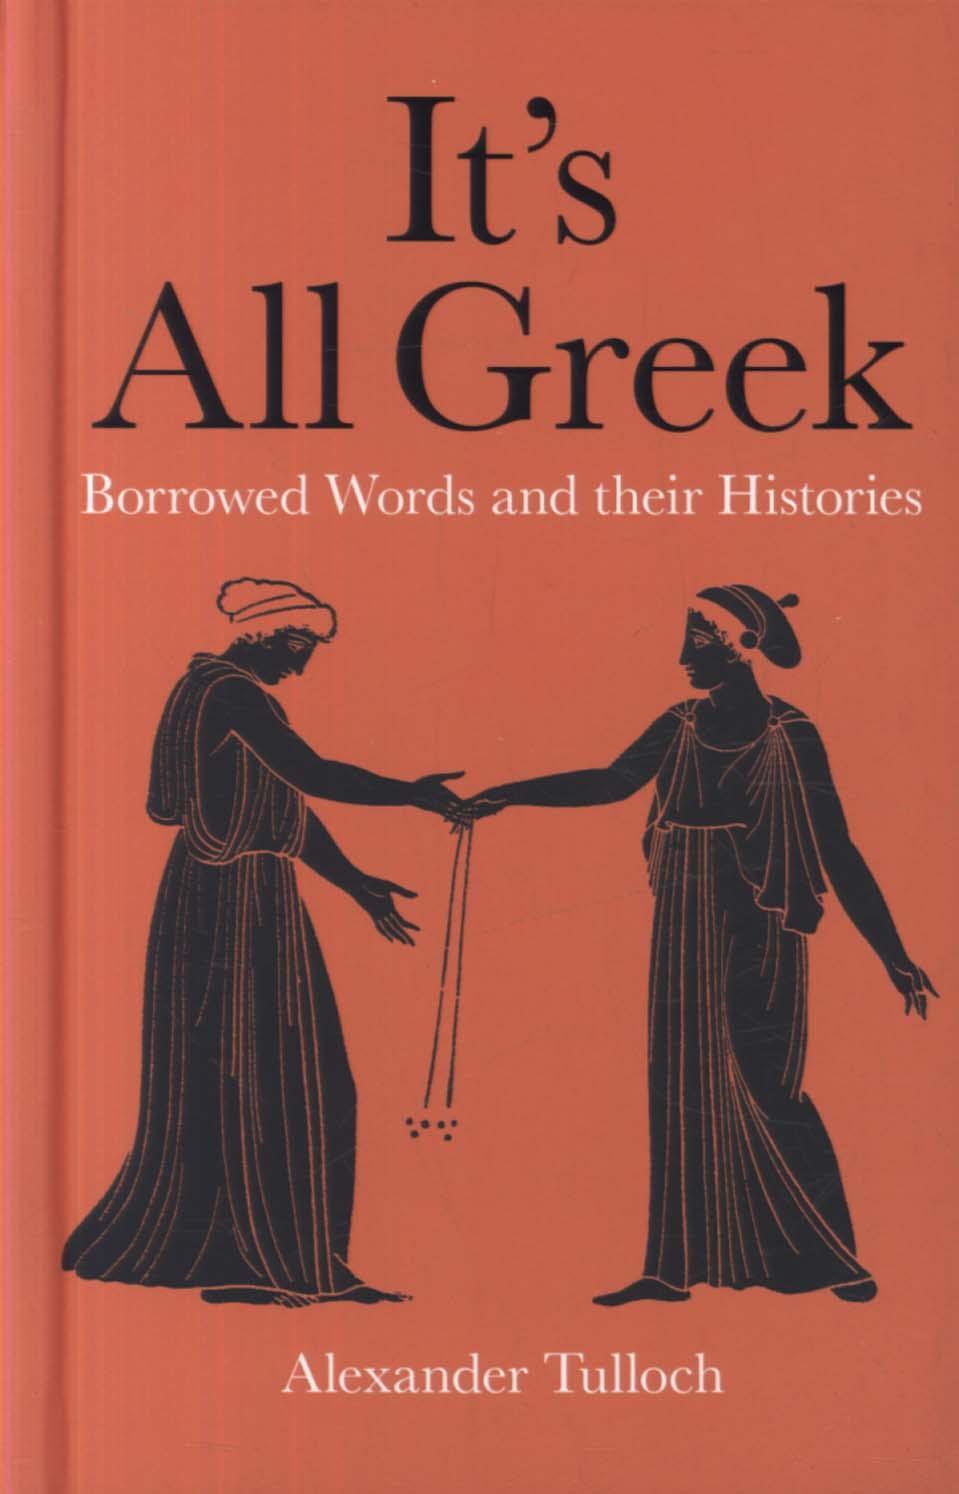 It's All Greek